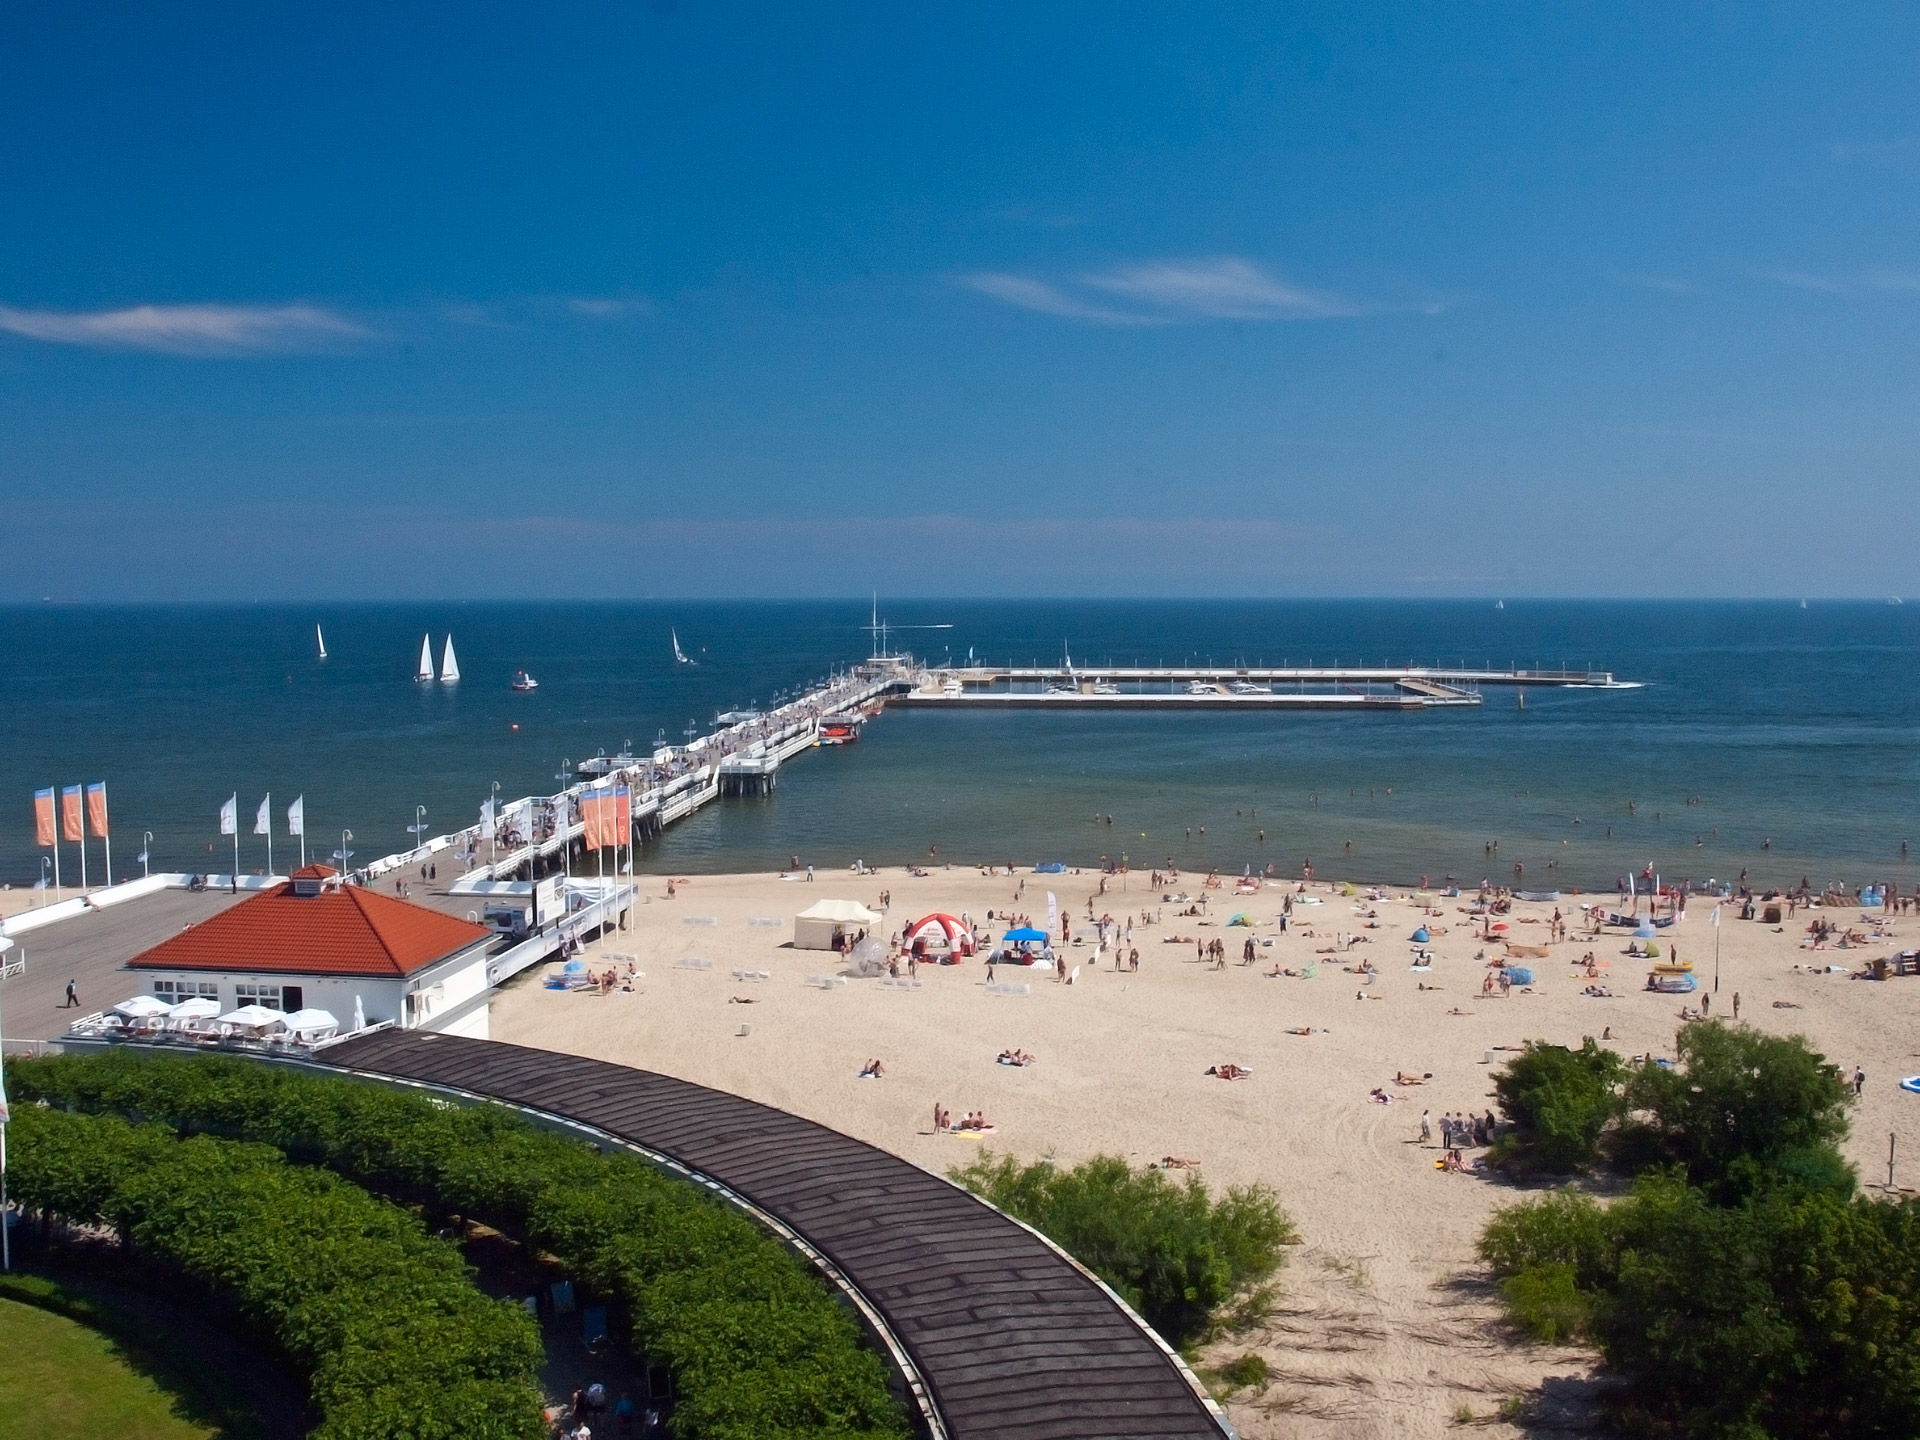 sopot-pier-beach-free-stock-photo-public-domain-pictures